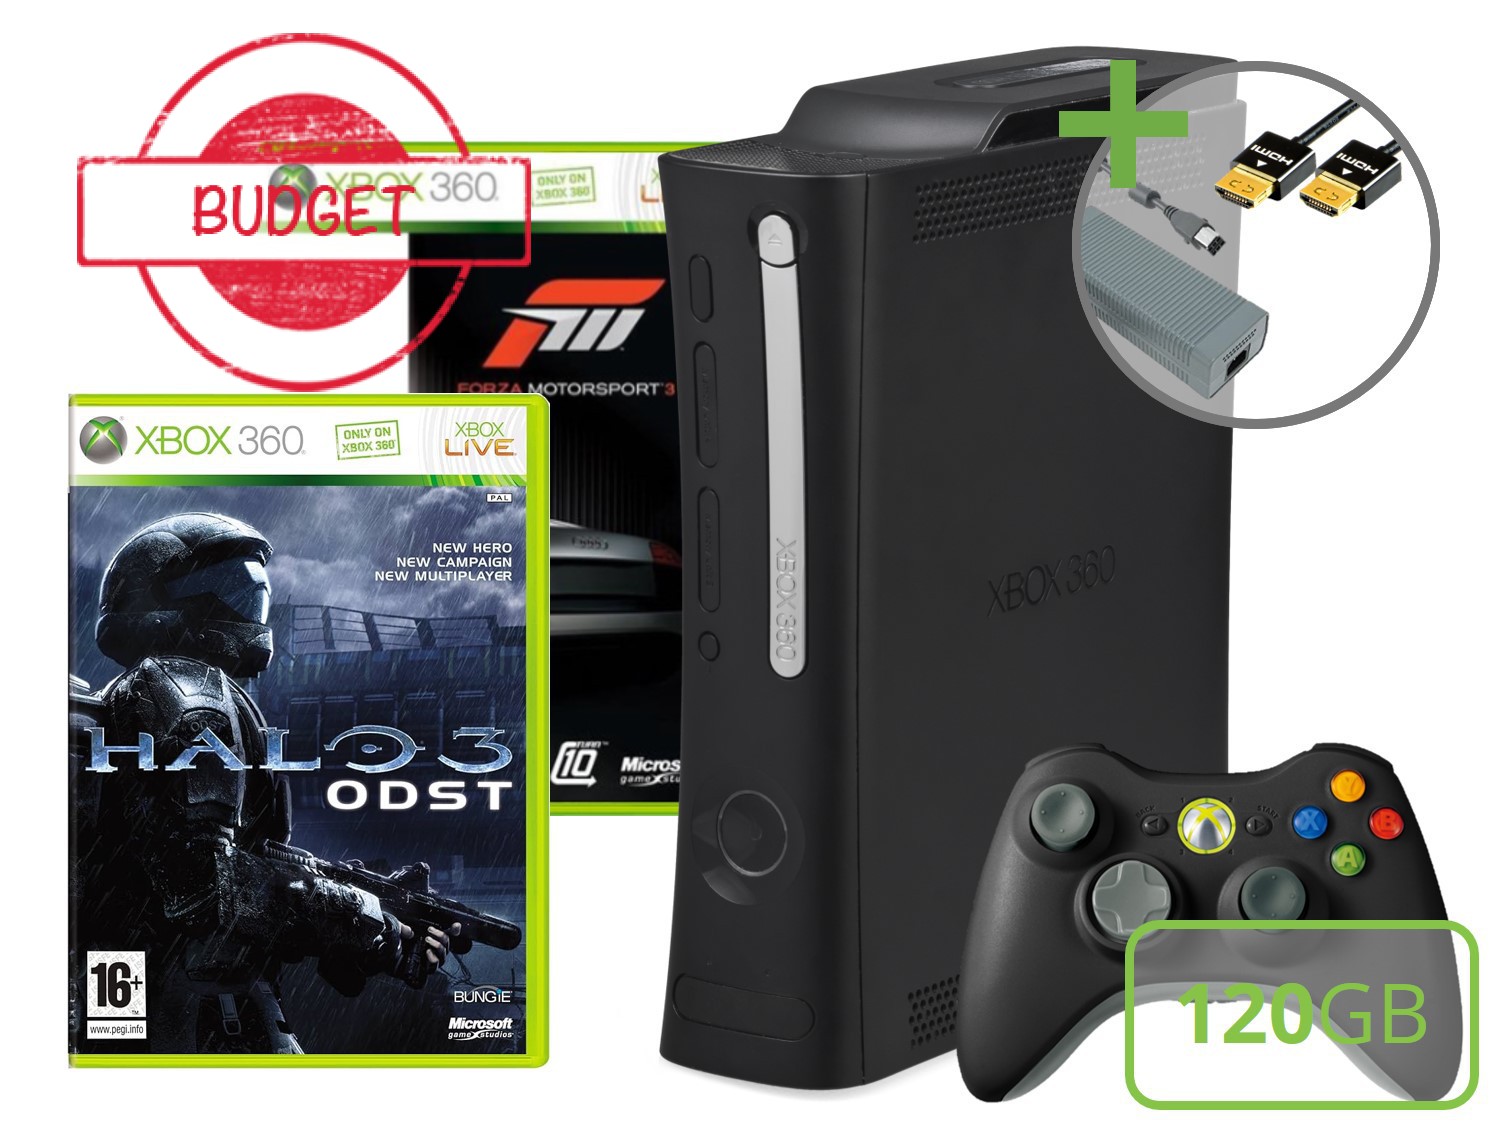 Microsoft Xbox 360 Elite Starter Pack - Forza Motorsport 3 and Halo 3: ODST Edition - Budget Kopen | Xbox 360 Hardware